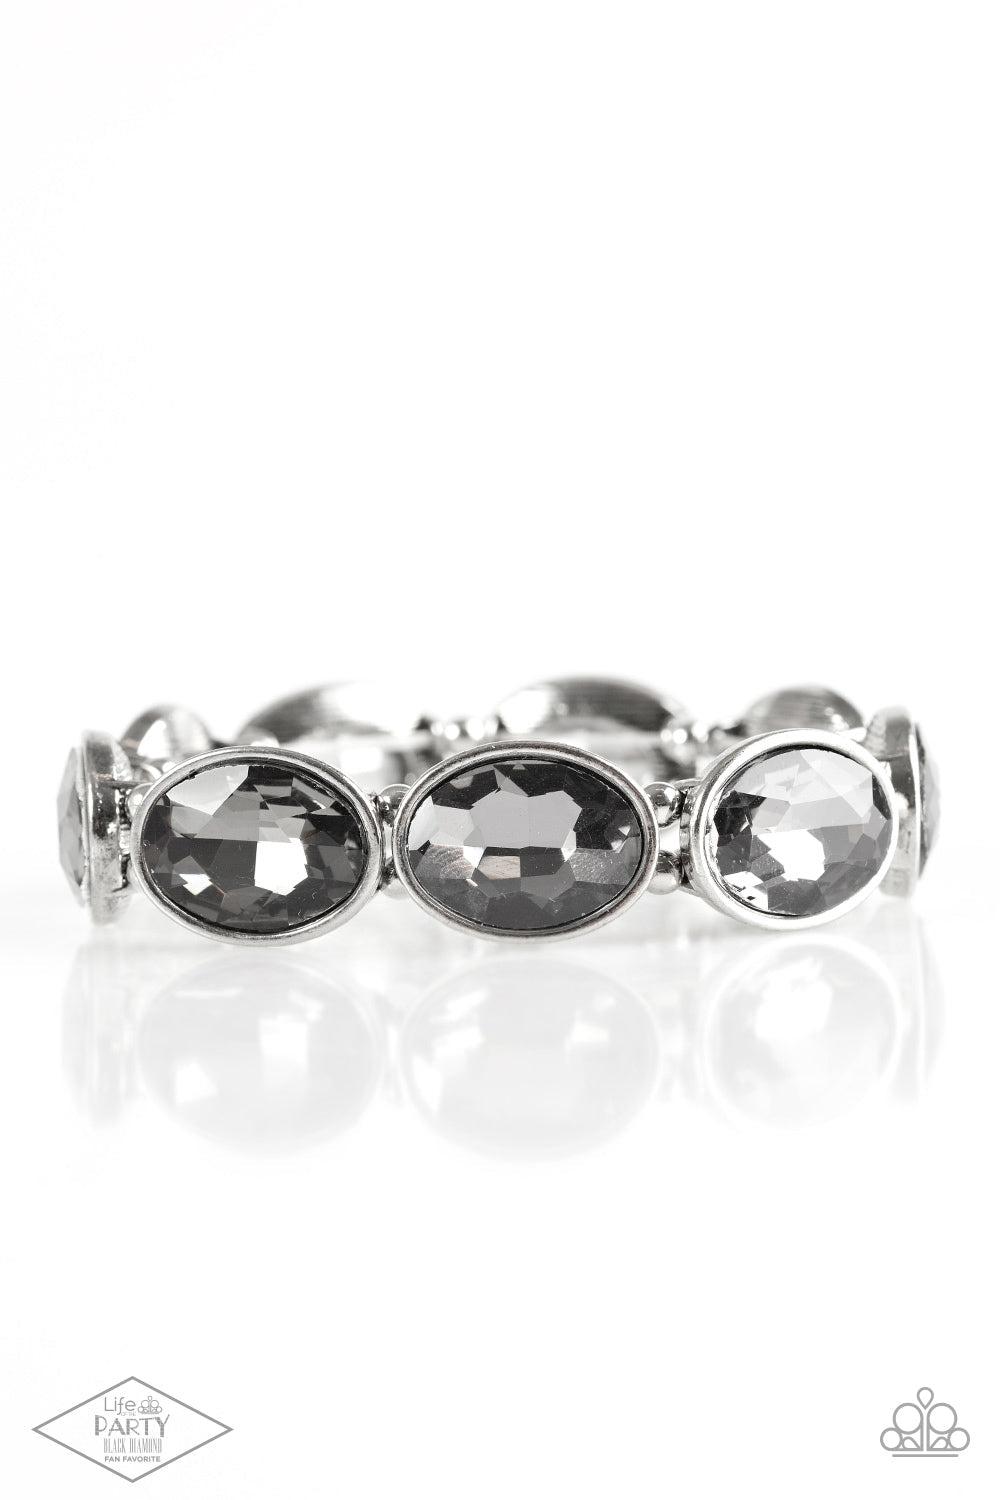 DIVA In Disguise Silver Rhinestone Bracelet - Paparazzi Accessories- lightbox - CarasShop.com - $5 Jewelry by Cara Jewels